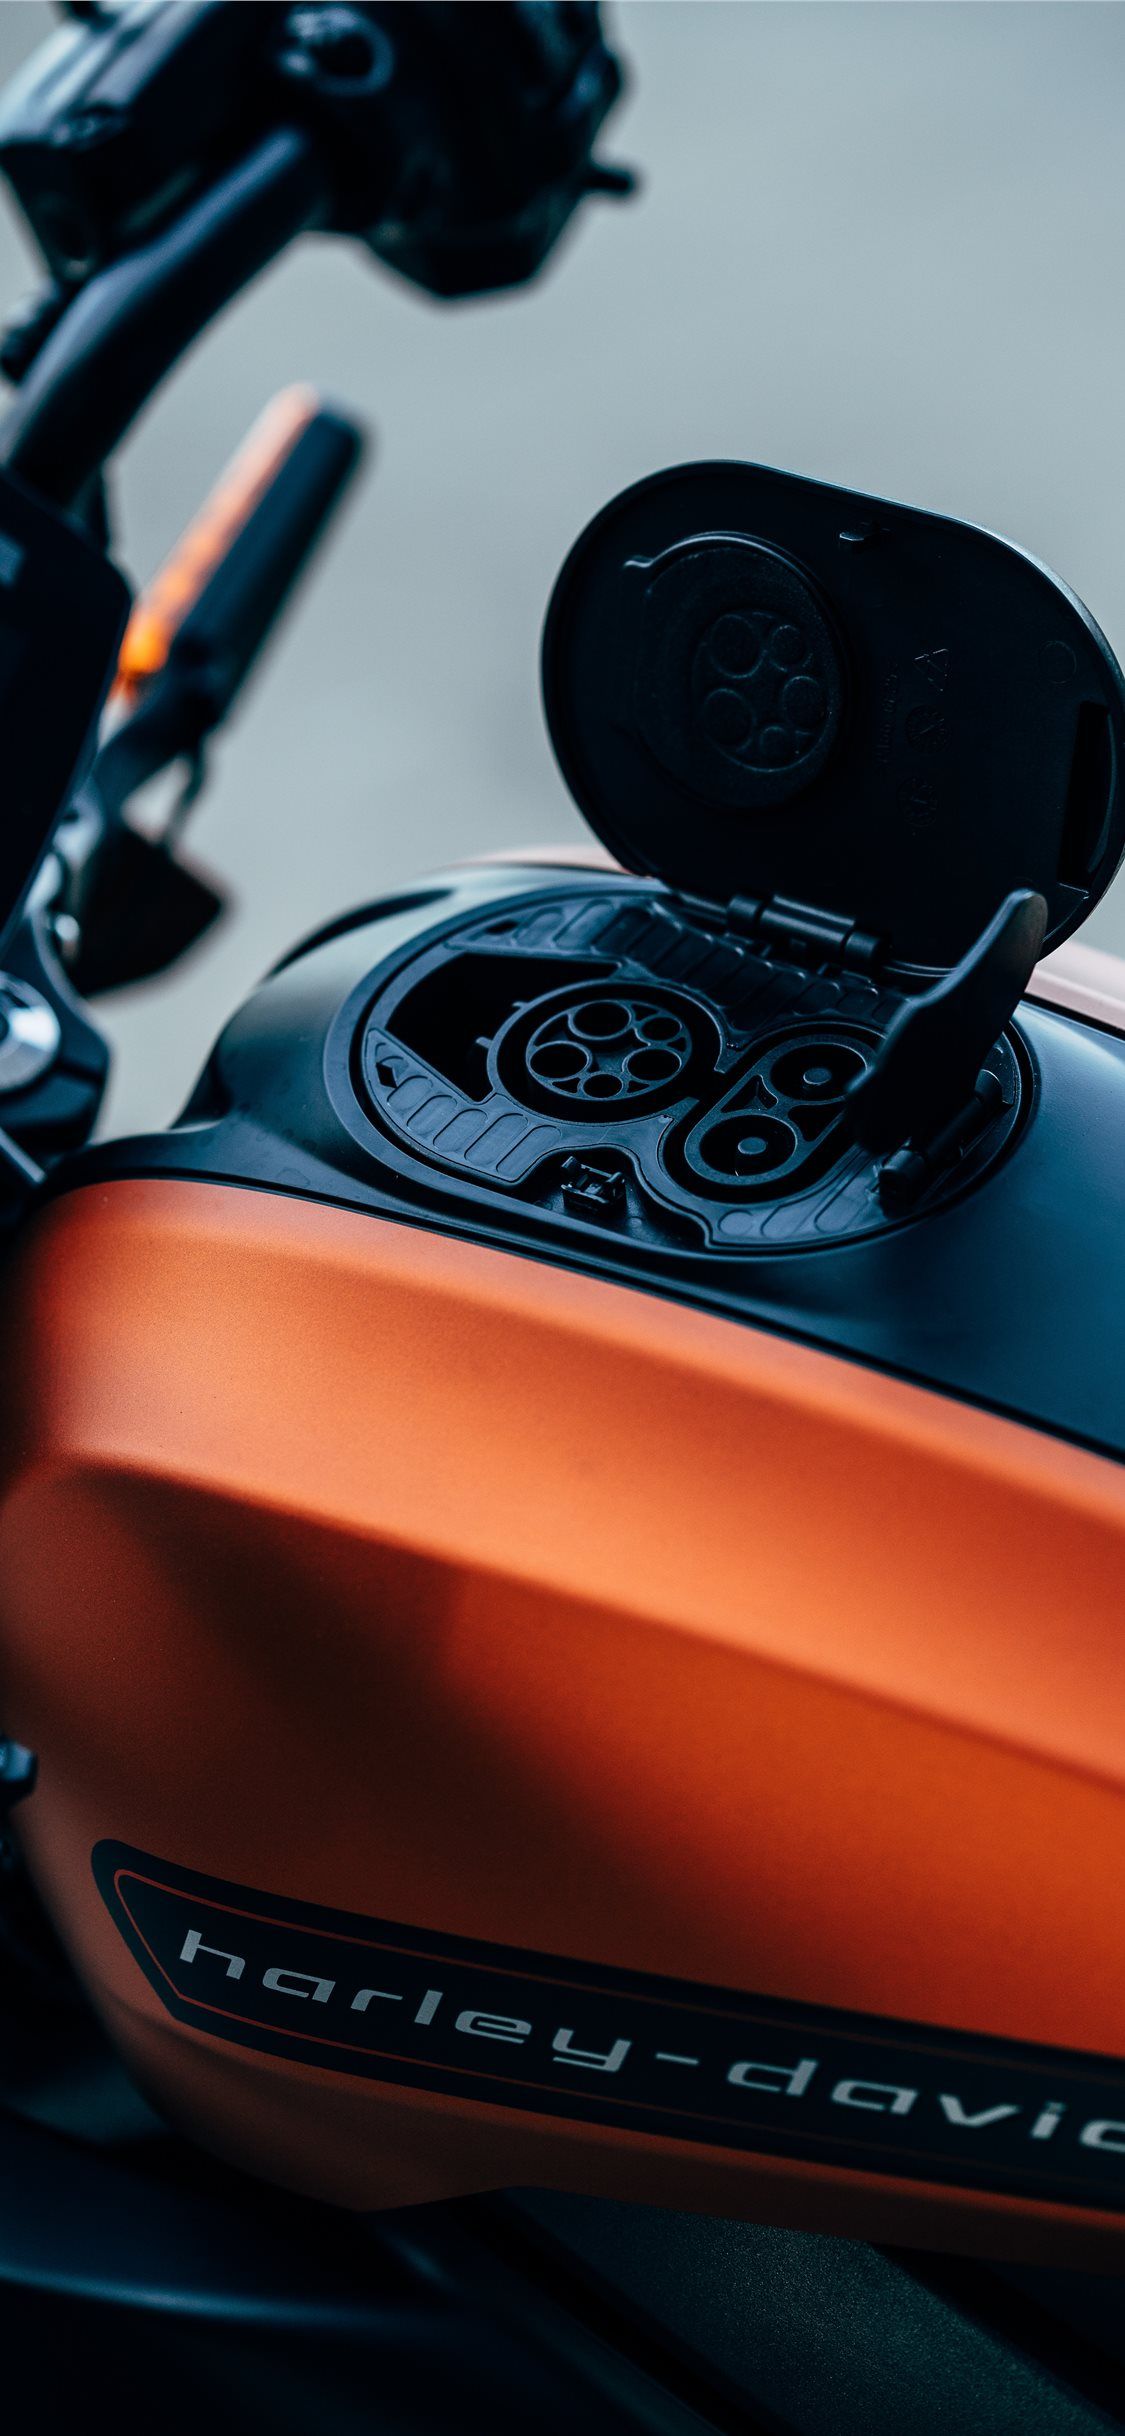 orange and black Harley Davidson motorcycle iPhone X Wallpaper Free Download